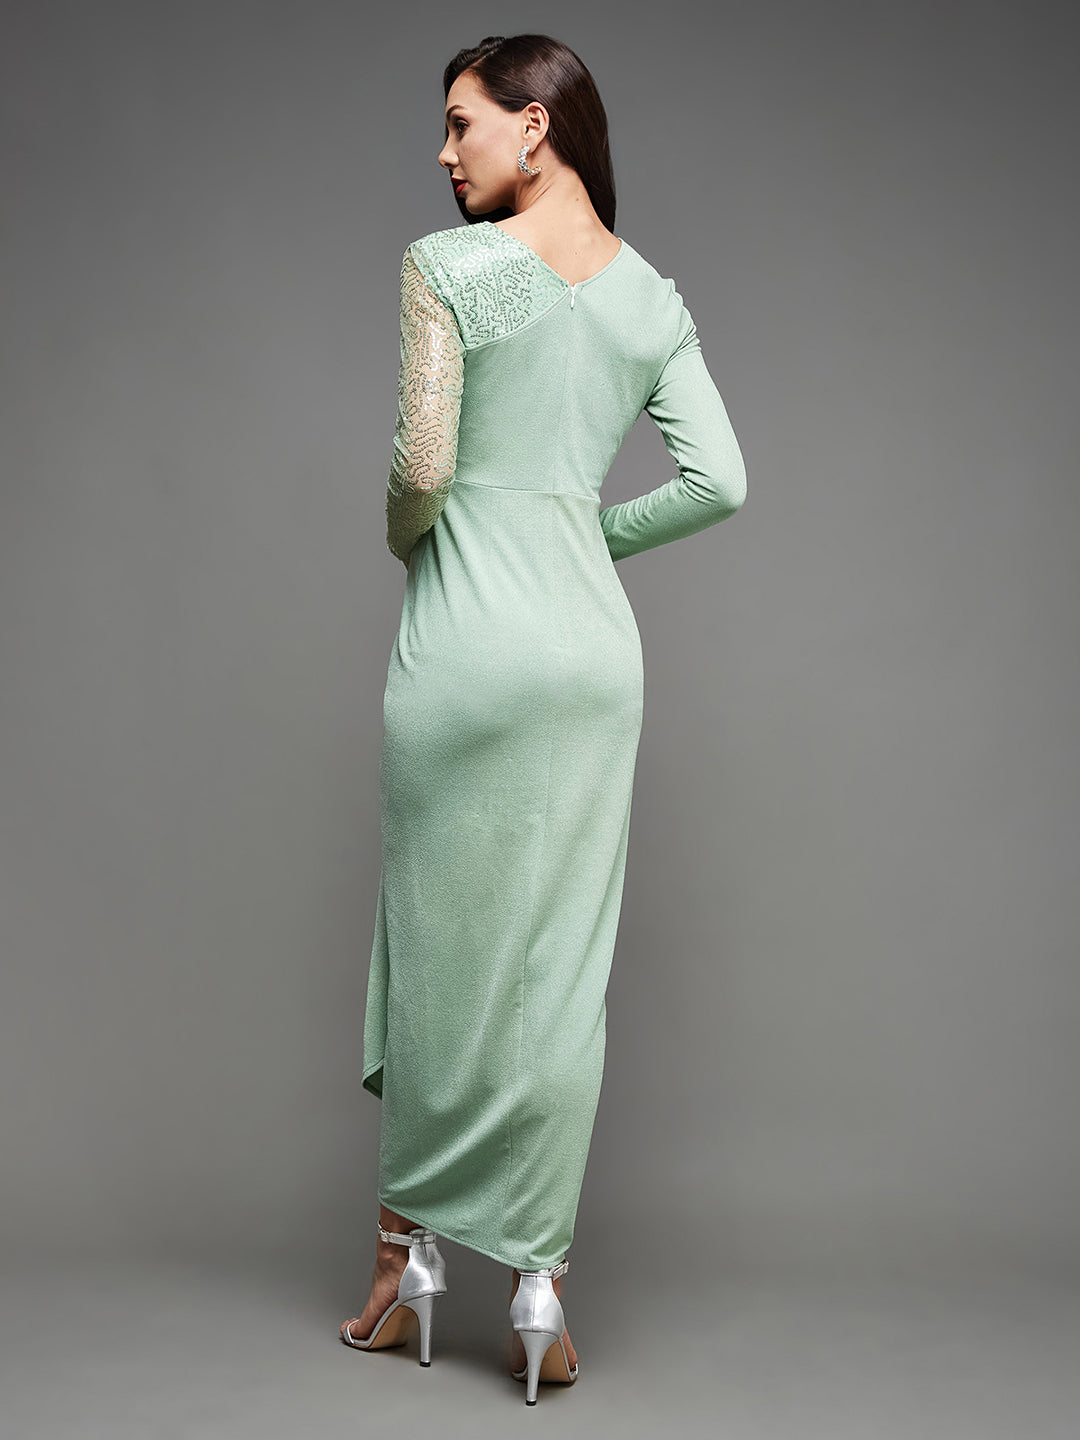 Women's Mint Embellished V-Neck Full Sleeve Polyester Pleated Slim Fit Longline Dress